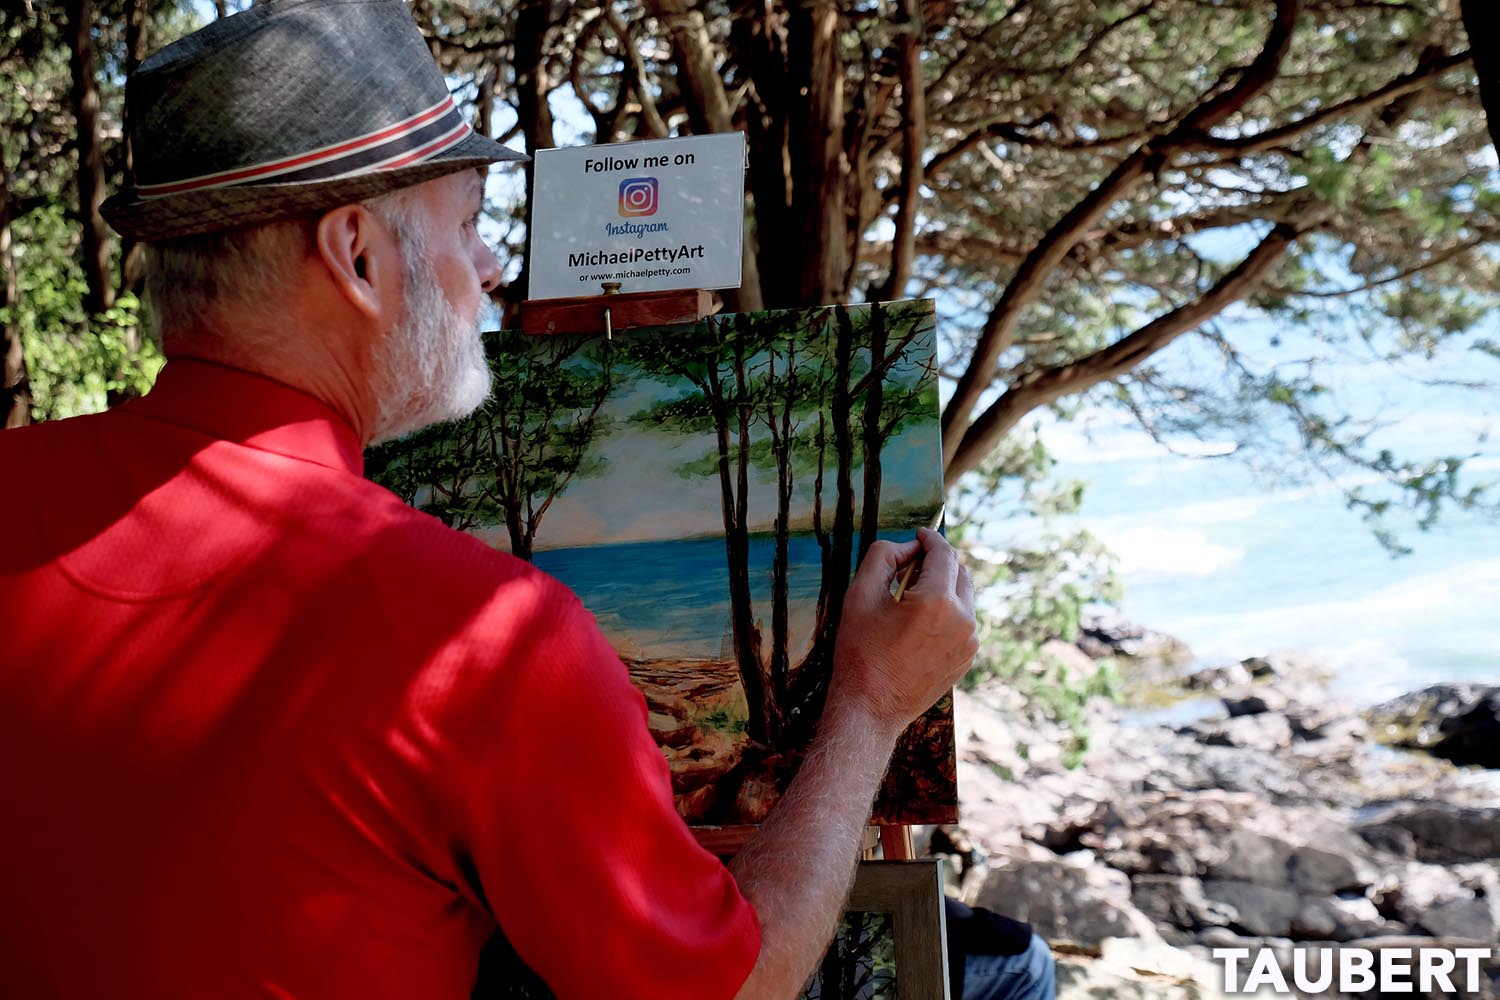 Ogunquit Art Colony - Perkins Cove Plein Air Painting Event - Ogunquit, Maine